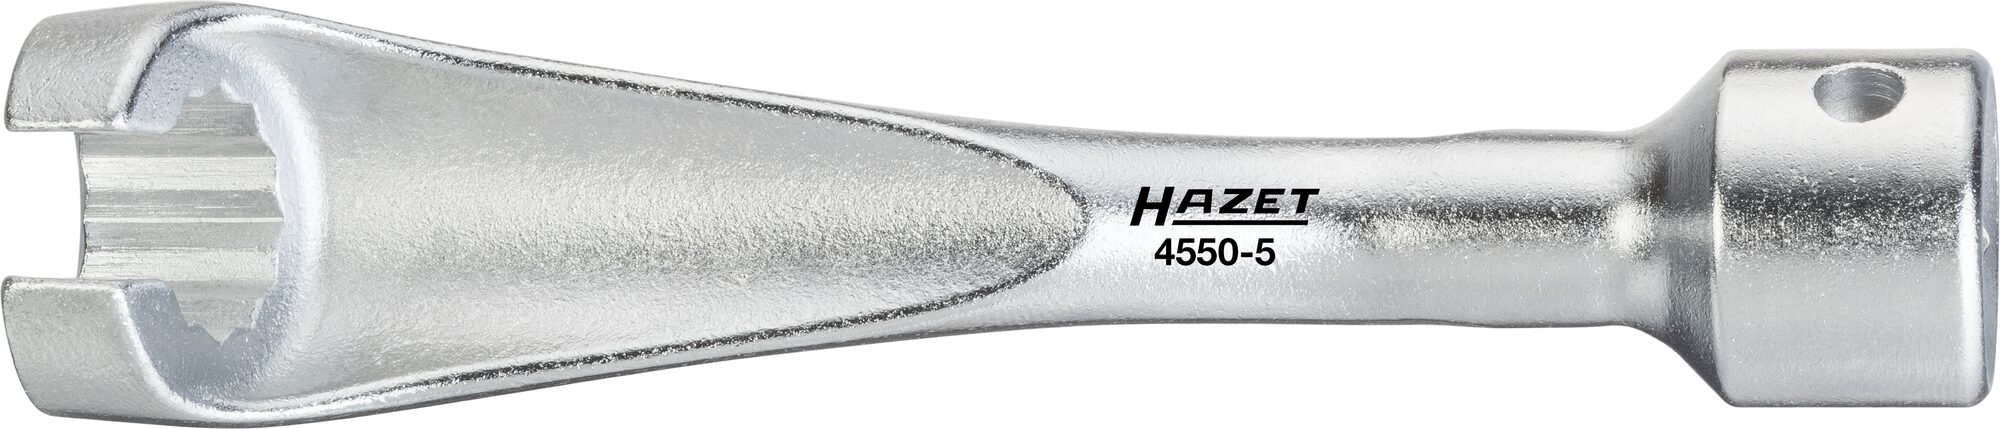 HAZET Einspritzleitungs-Schlüssel 4550-5 · Vierkant hohl 12,5 mm (1/2 Zoll) · Außen Doppel-Sechskant Profil · 14 mm